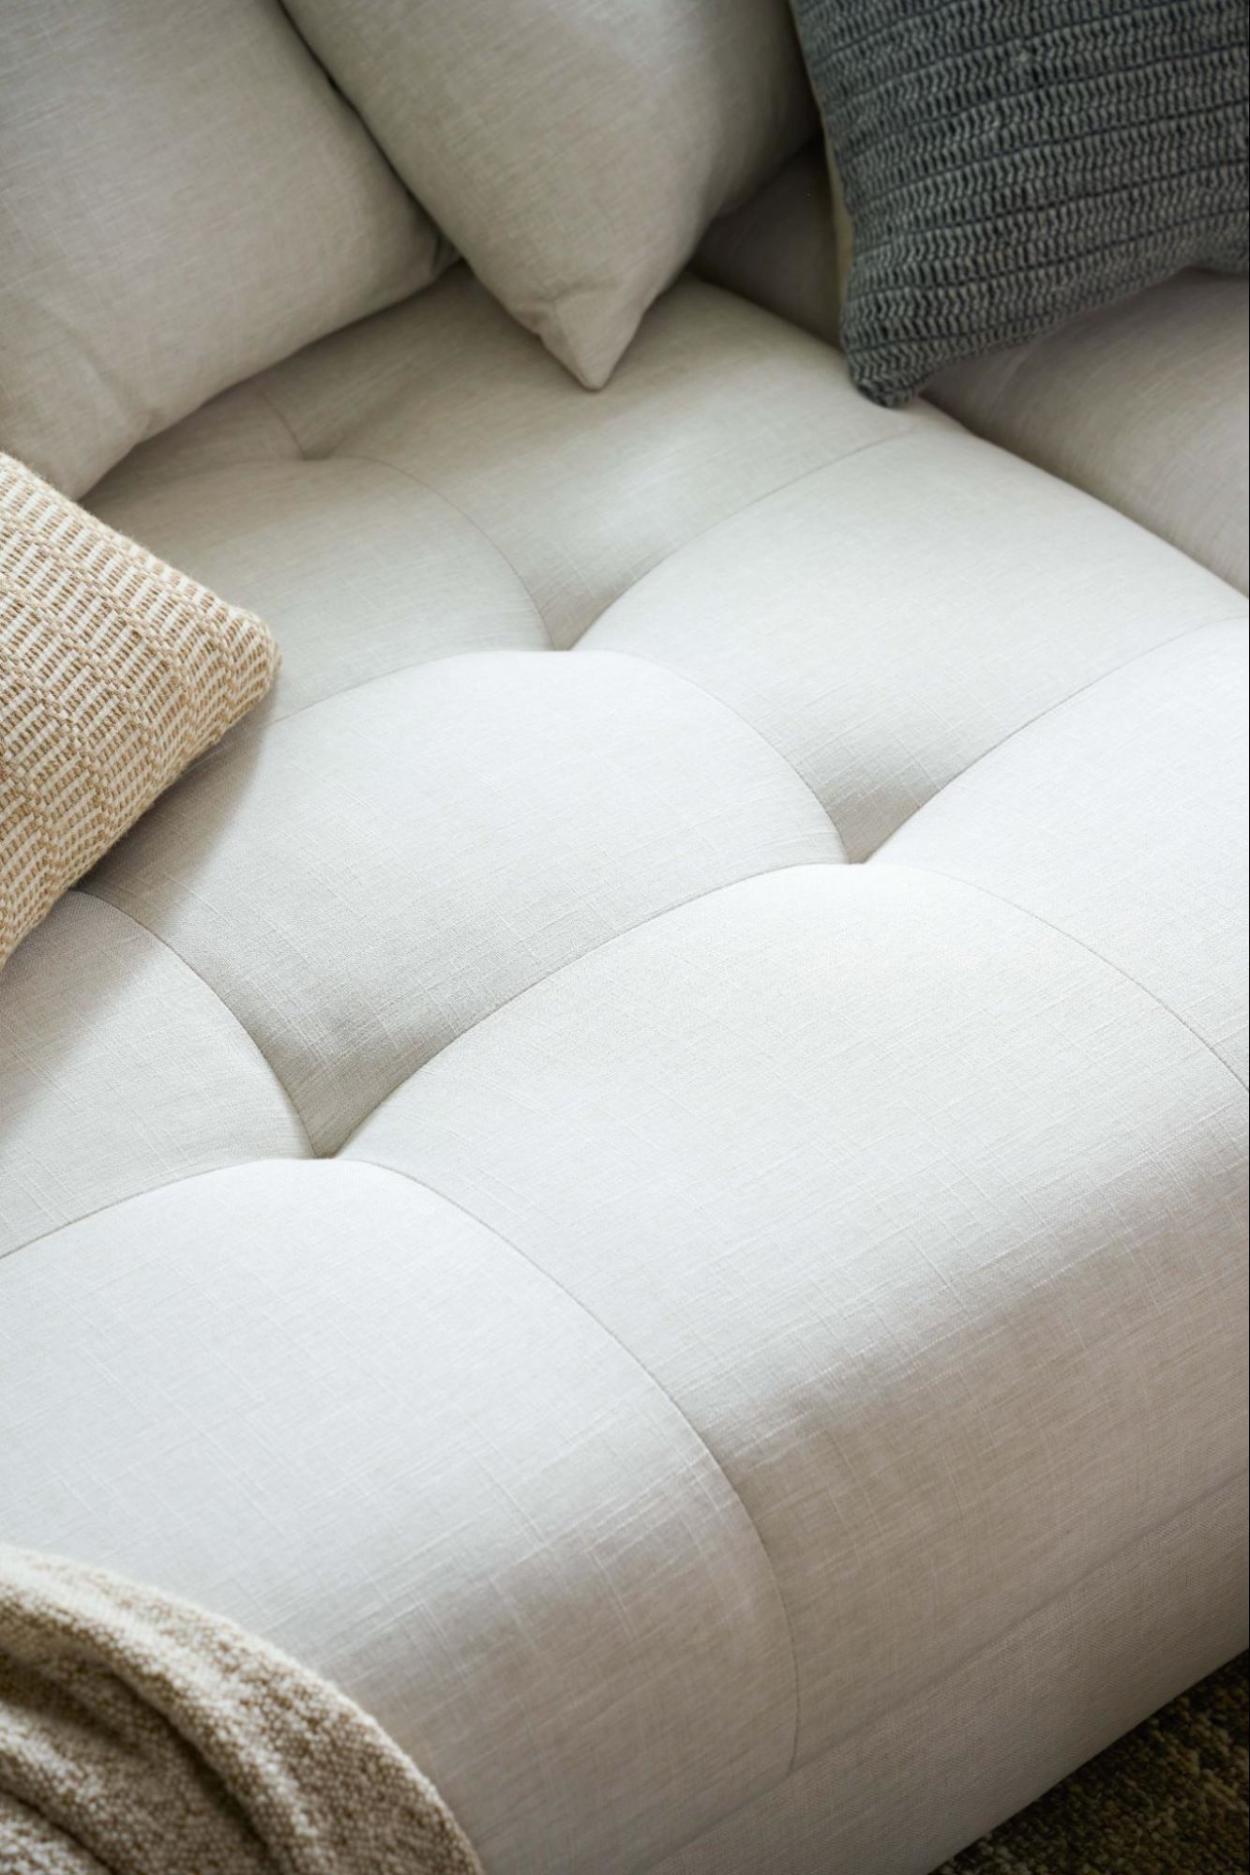 Prone Cushion - Comfort. Reimagined.